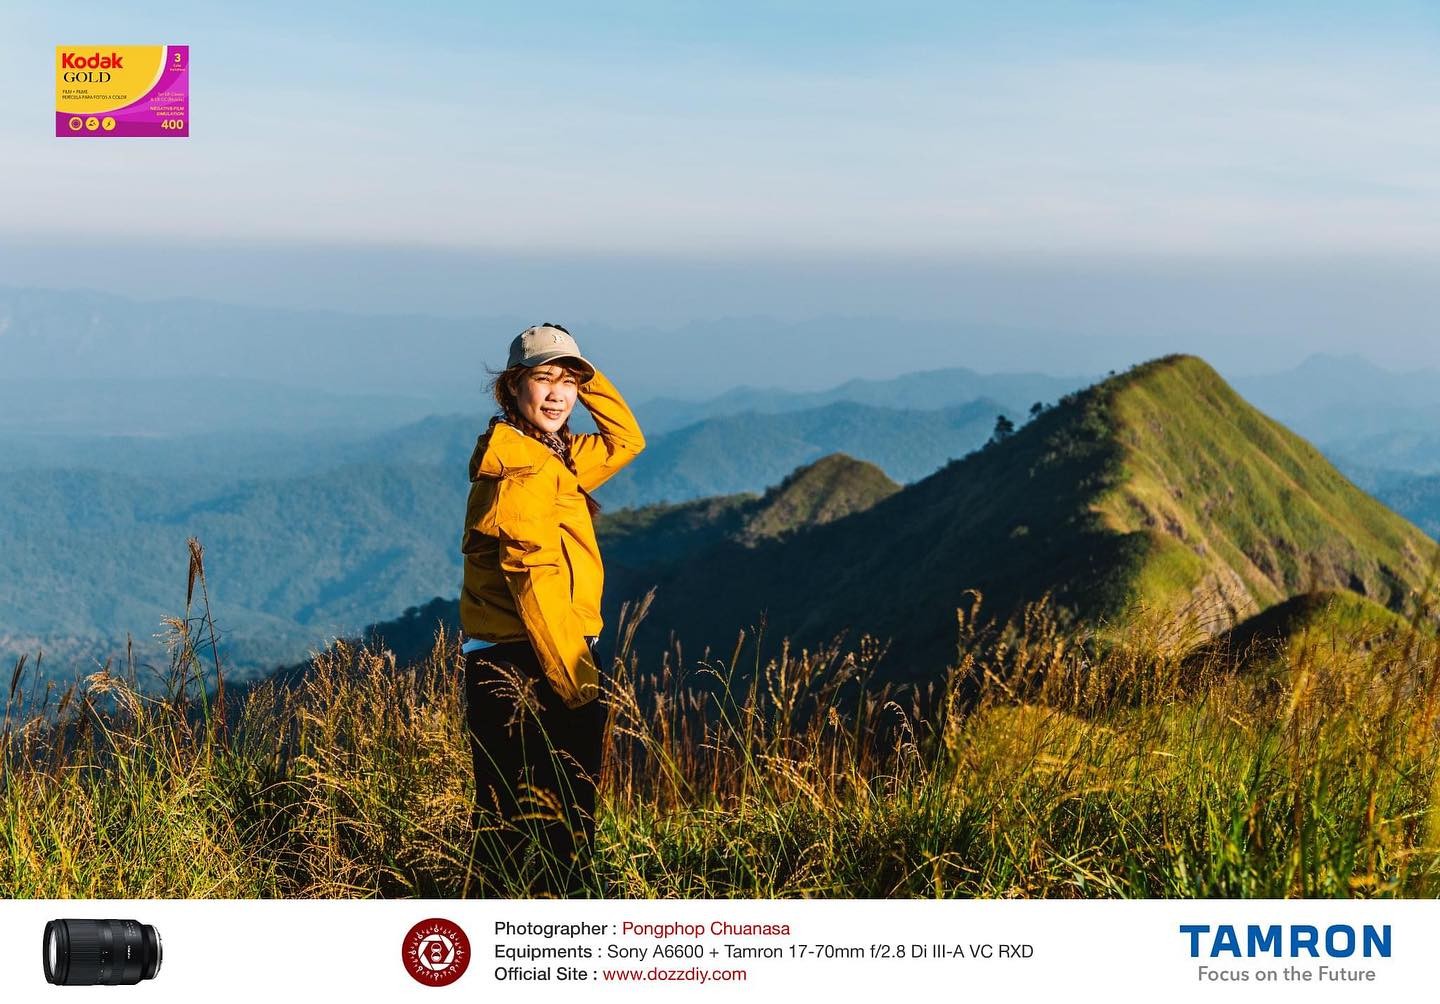 #travel #travelphoto #travelphotography #travelgram #travelthailand #traveladdict #traveltheworld #travelstoke #adventure #nature #mountainlovers #mountain #clearsky #climbing #trekking #morningsun #traveler #travelblogger